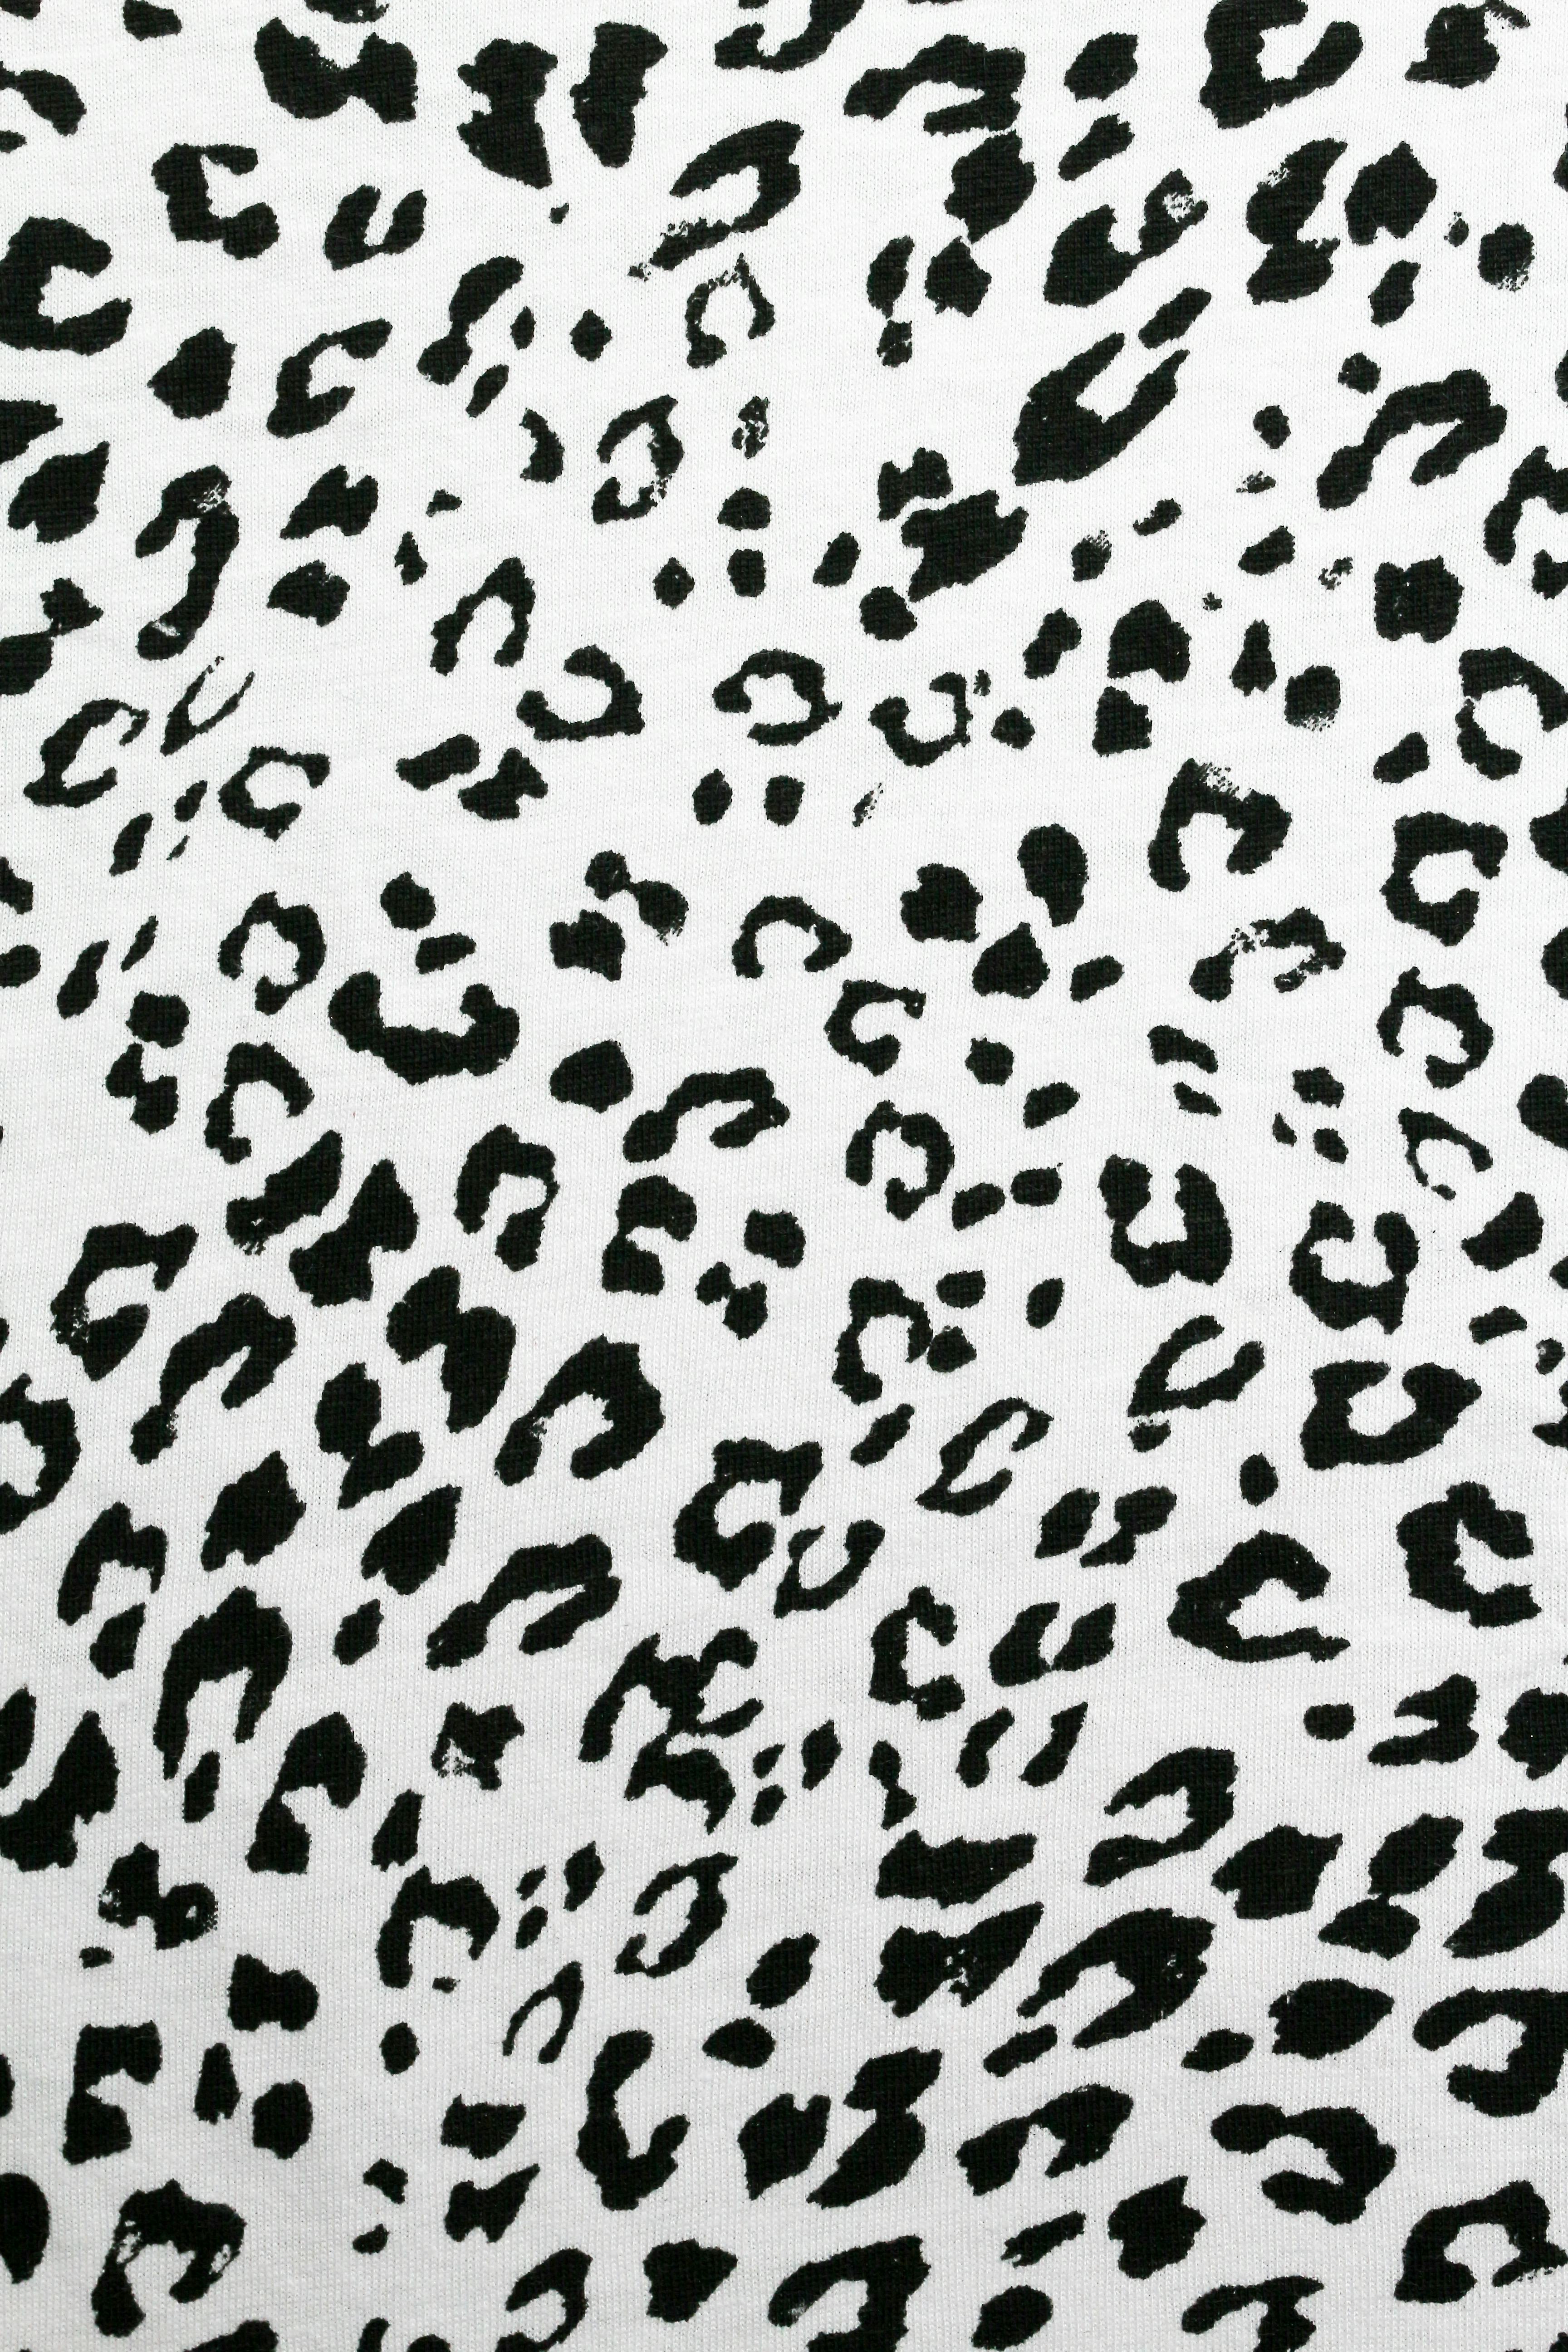 Download Leopard Print Beautiful Wallpaper Background RoyaltyFree Vector  Graphic  Pixabay